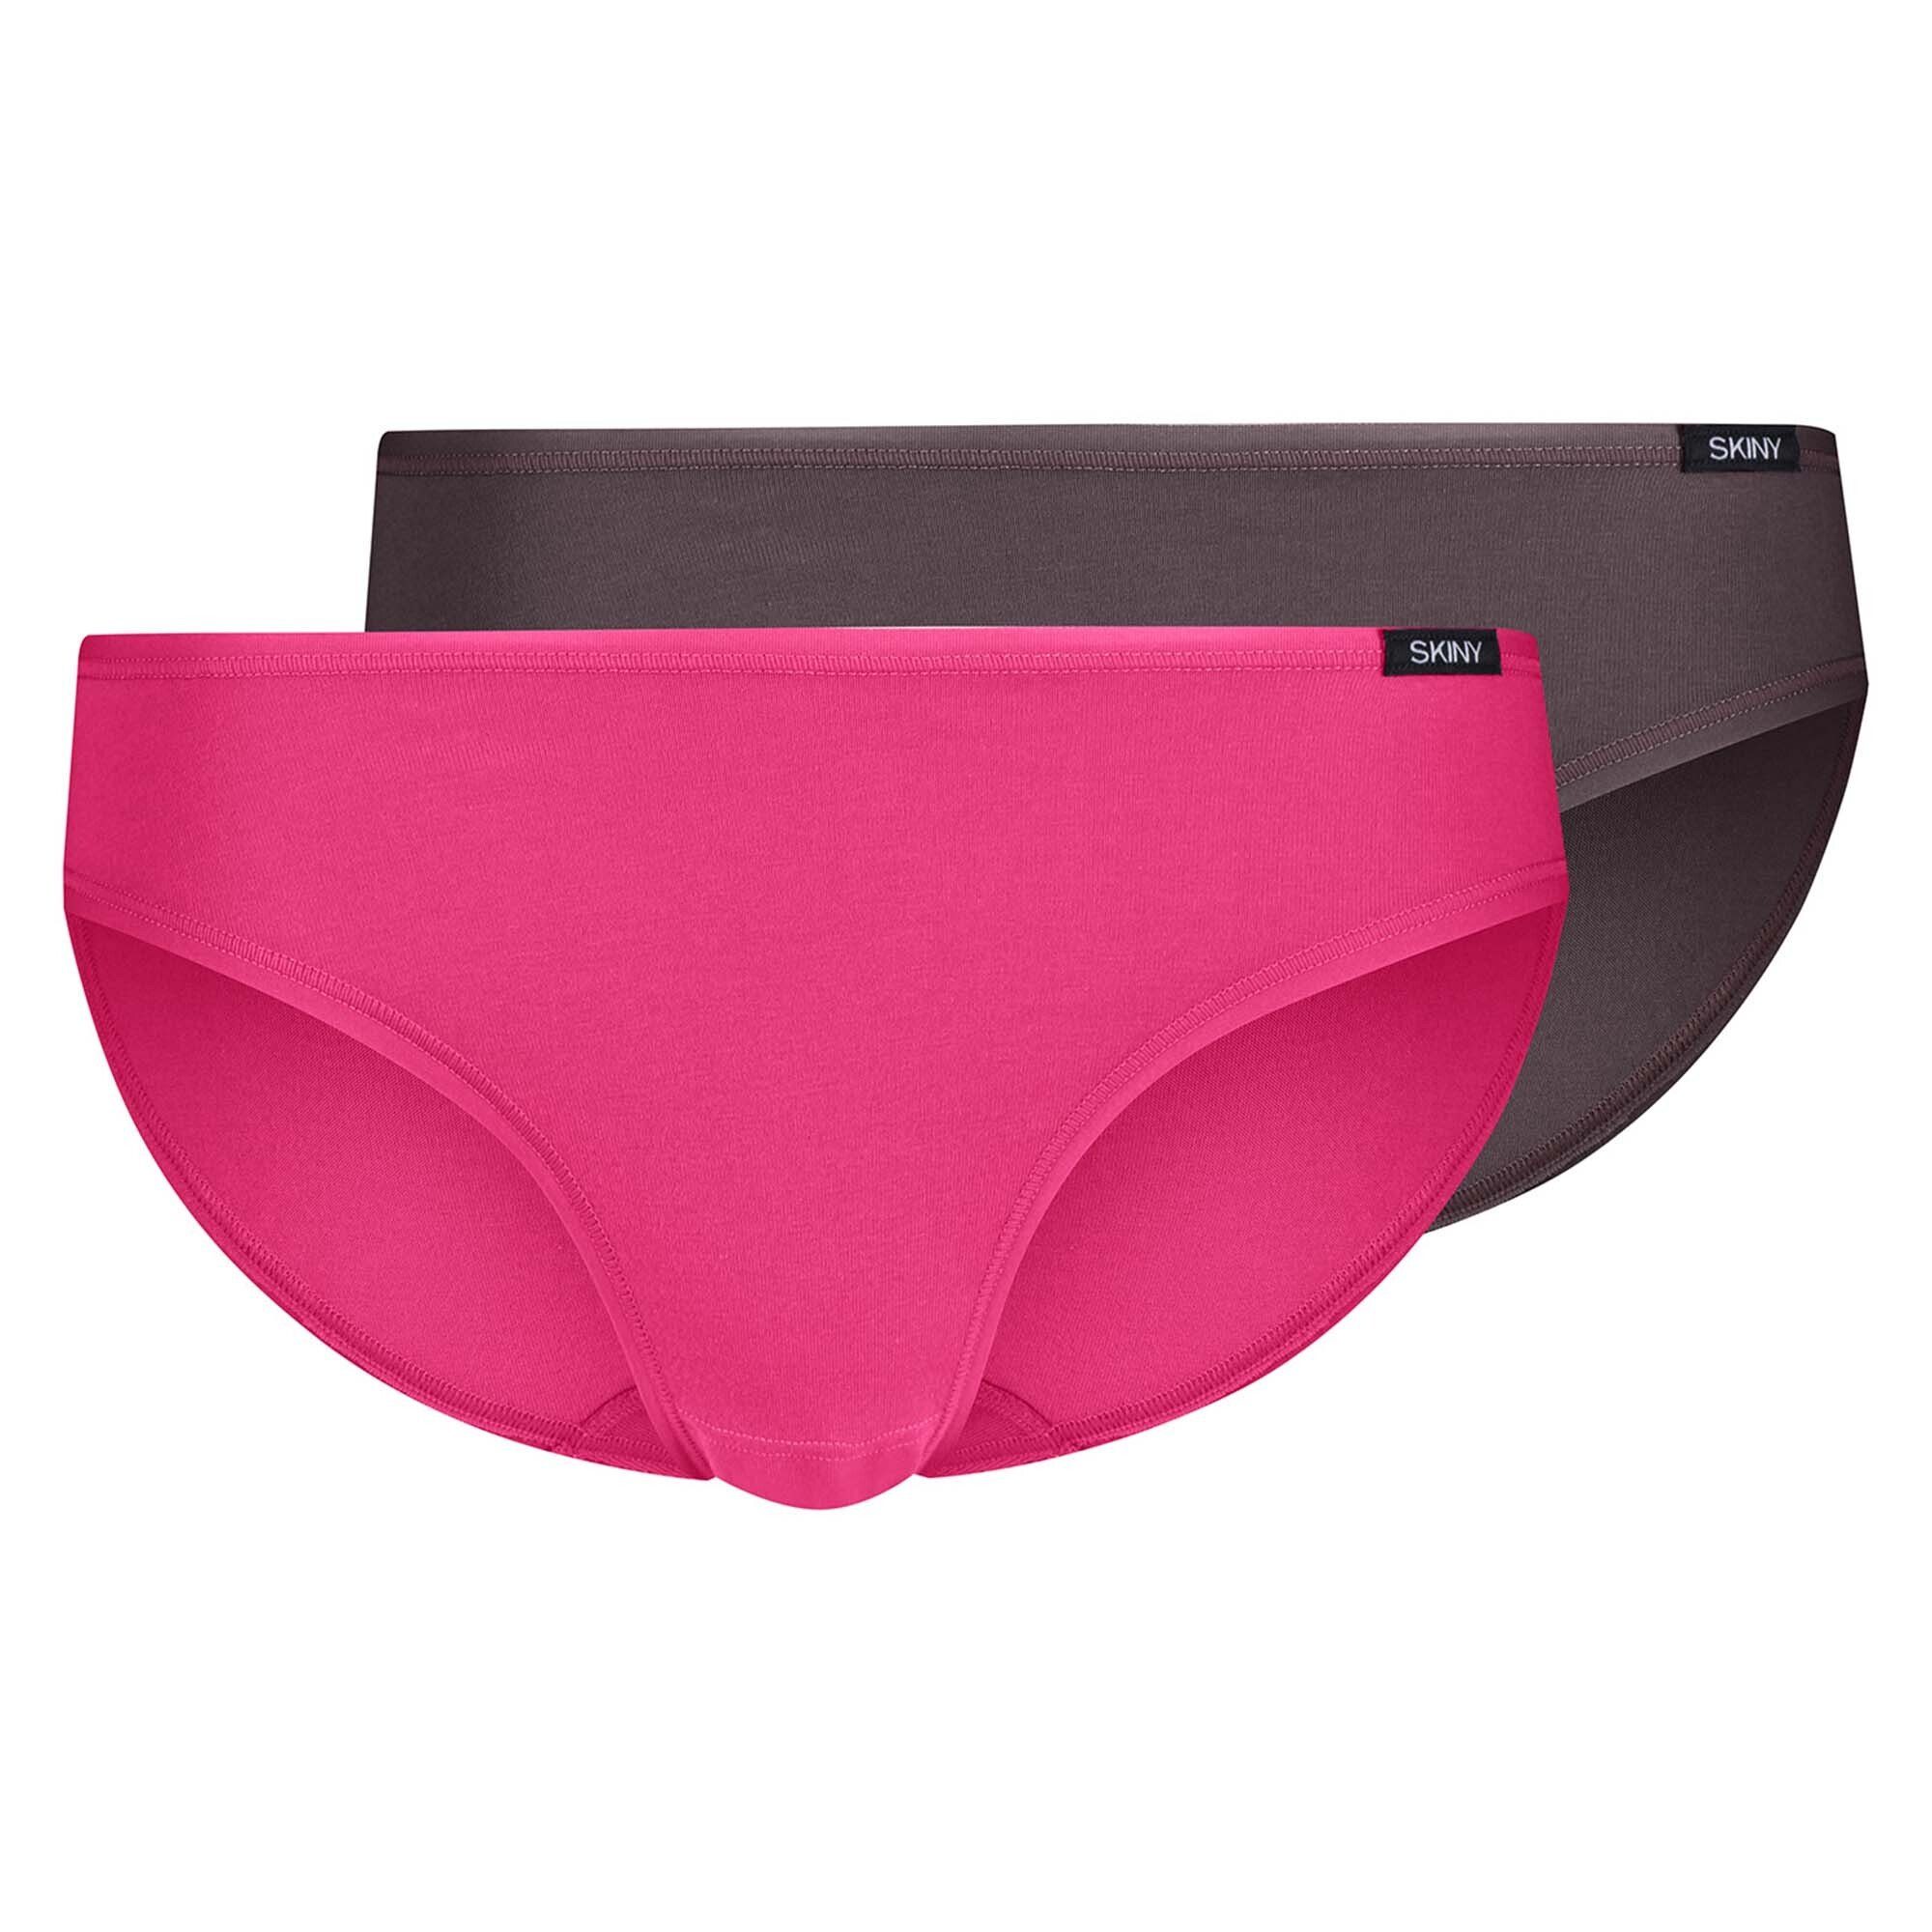 Skiny Slip Damen Rio Slip, 2er Pack - Bikini Slip, Cotton Pink/Taupe